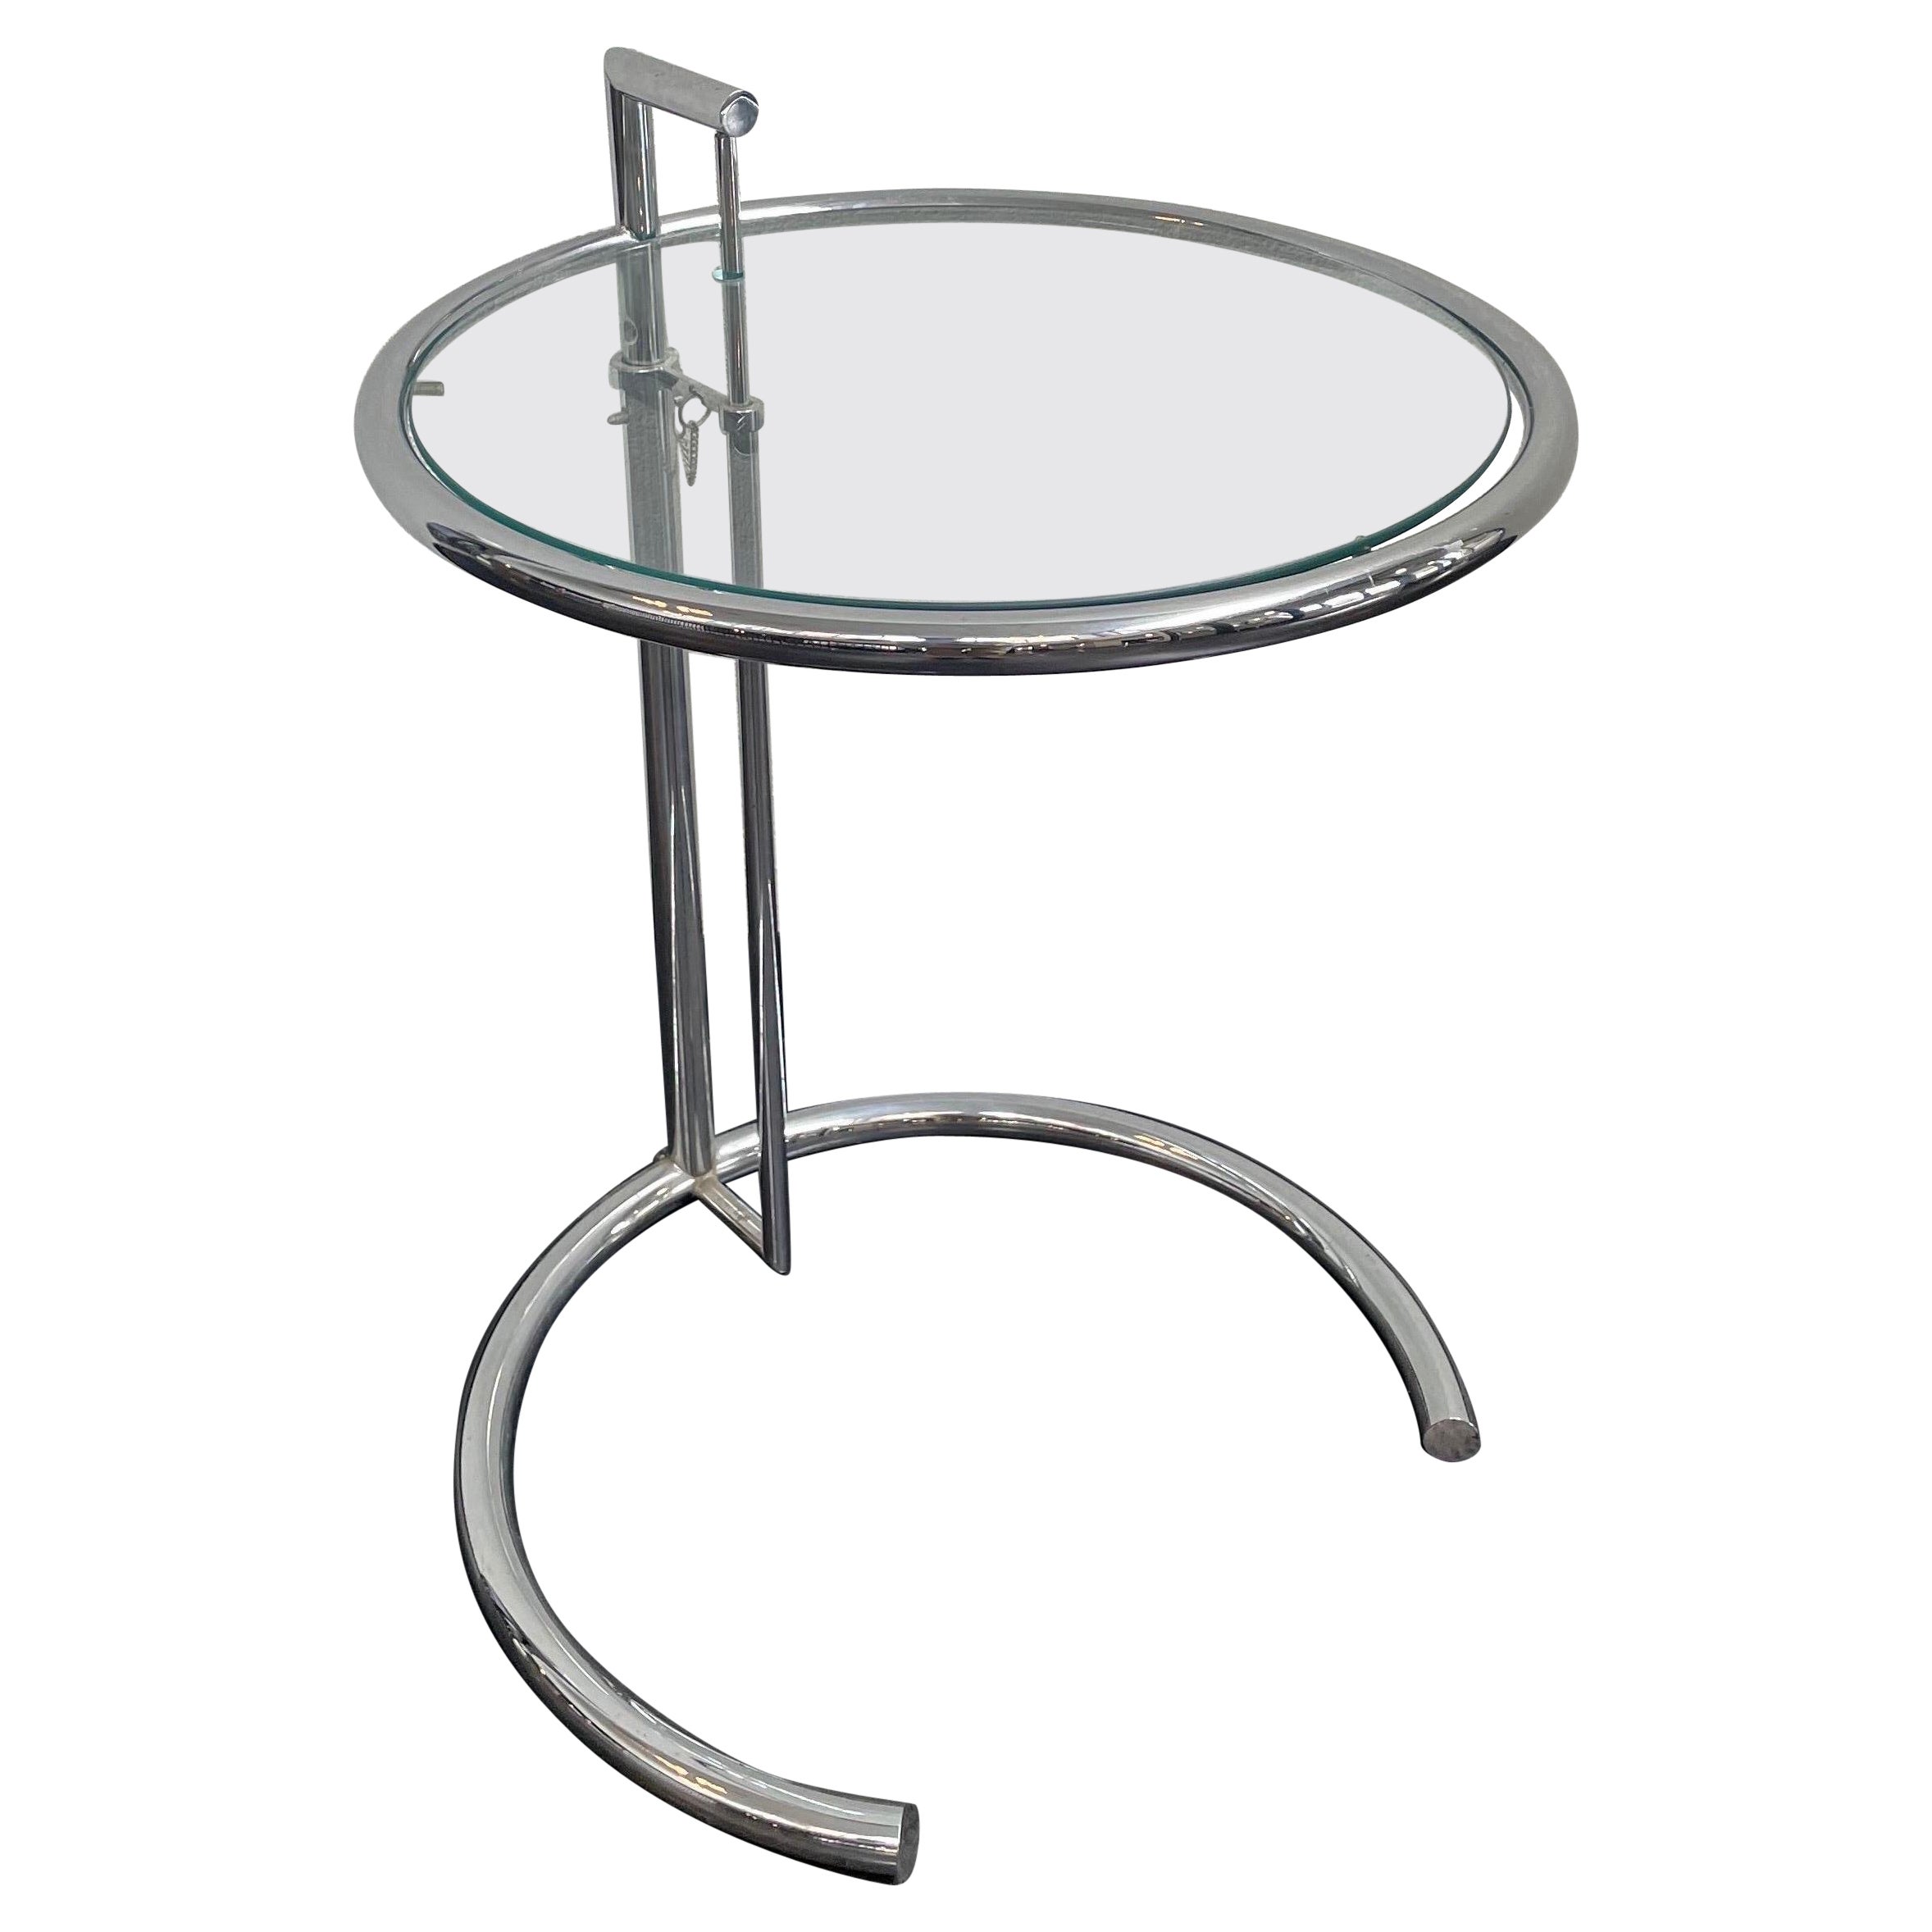 Eileen Gray’s E1027 Adjustable Side Table